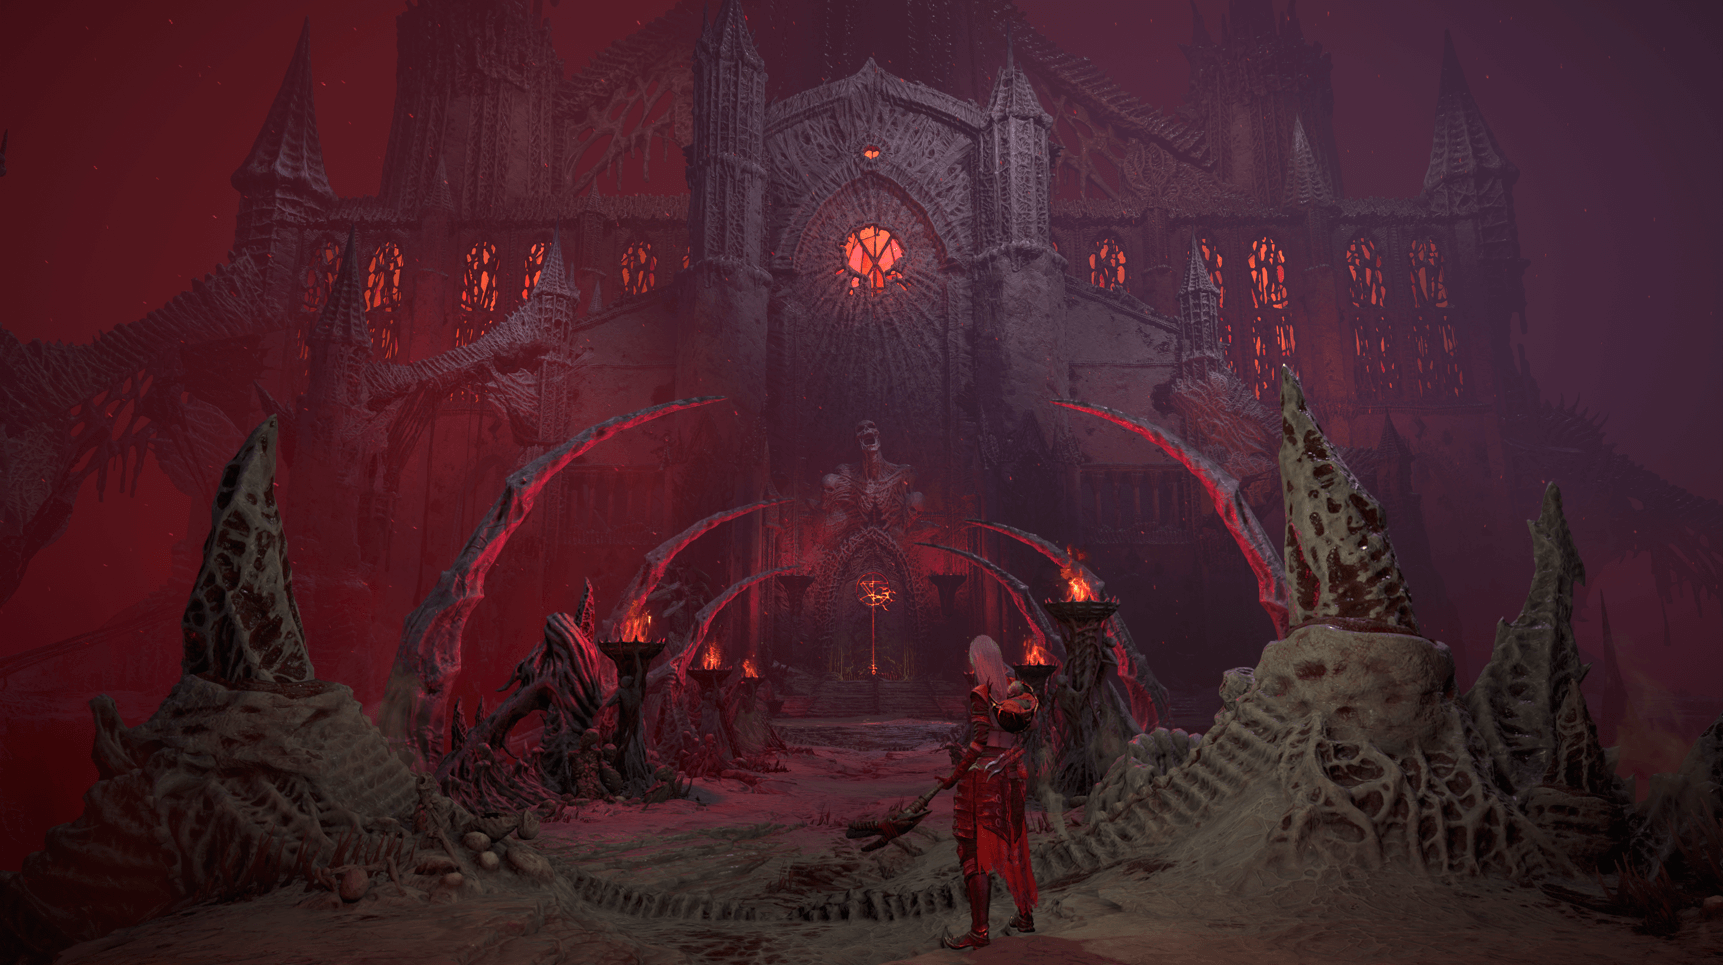 Diablo IV: Confira as notas e veja se o Diabo foi bem recebido - Canal do  Xbox